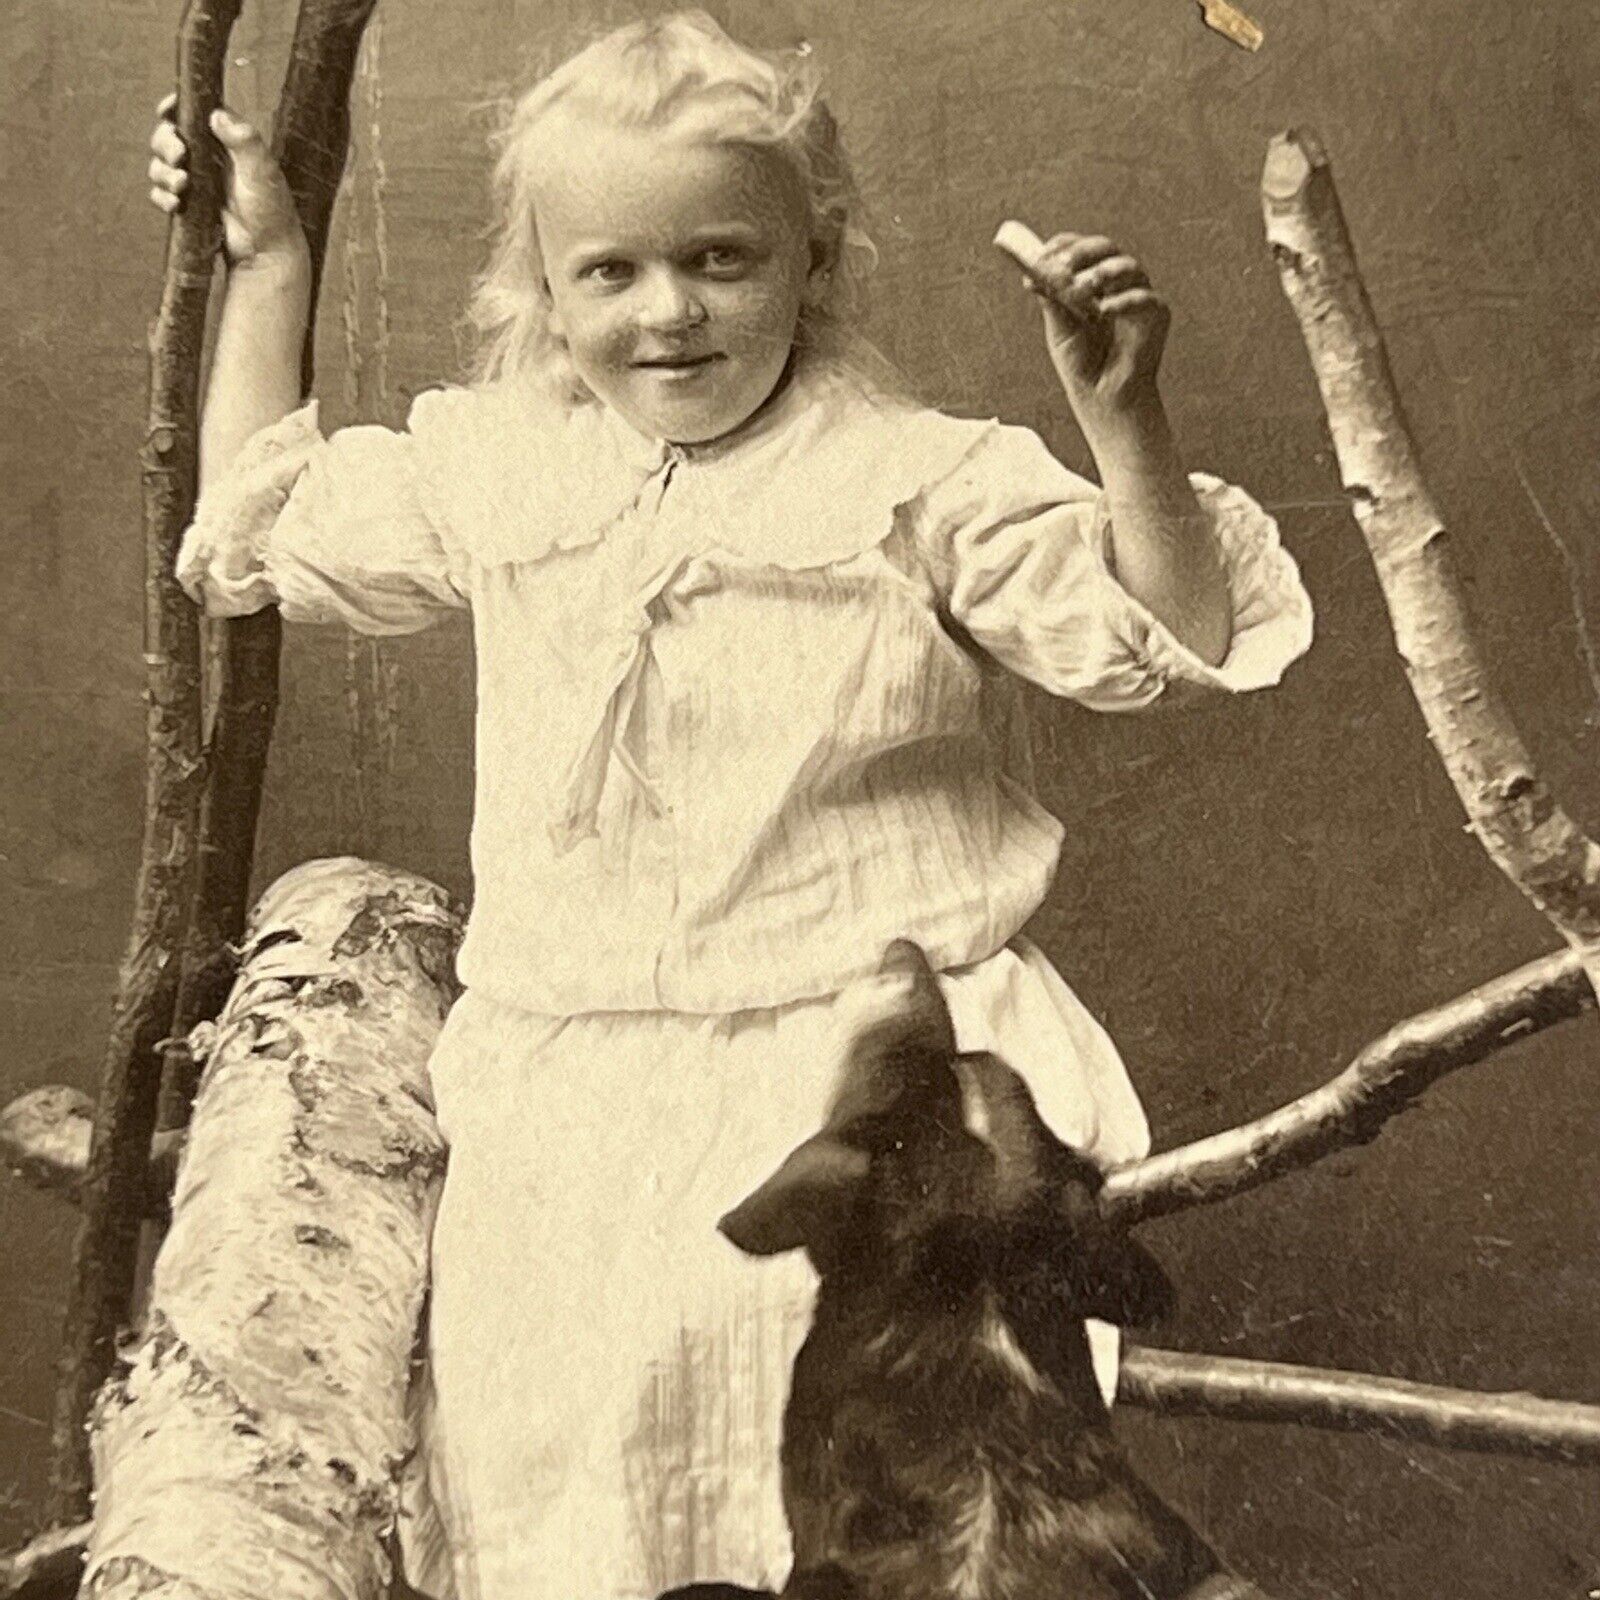 Antique CDV Photograph Adorable Little Girl Giving Beloved Dog Treat “Sit” Trick